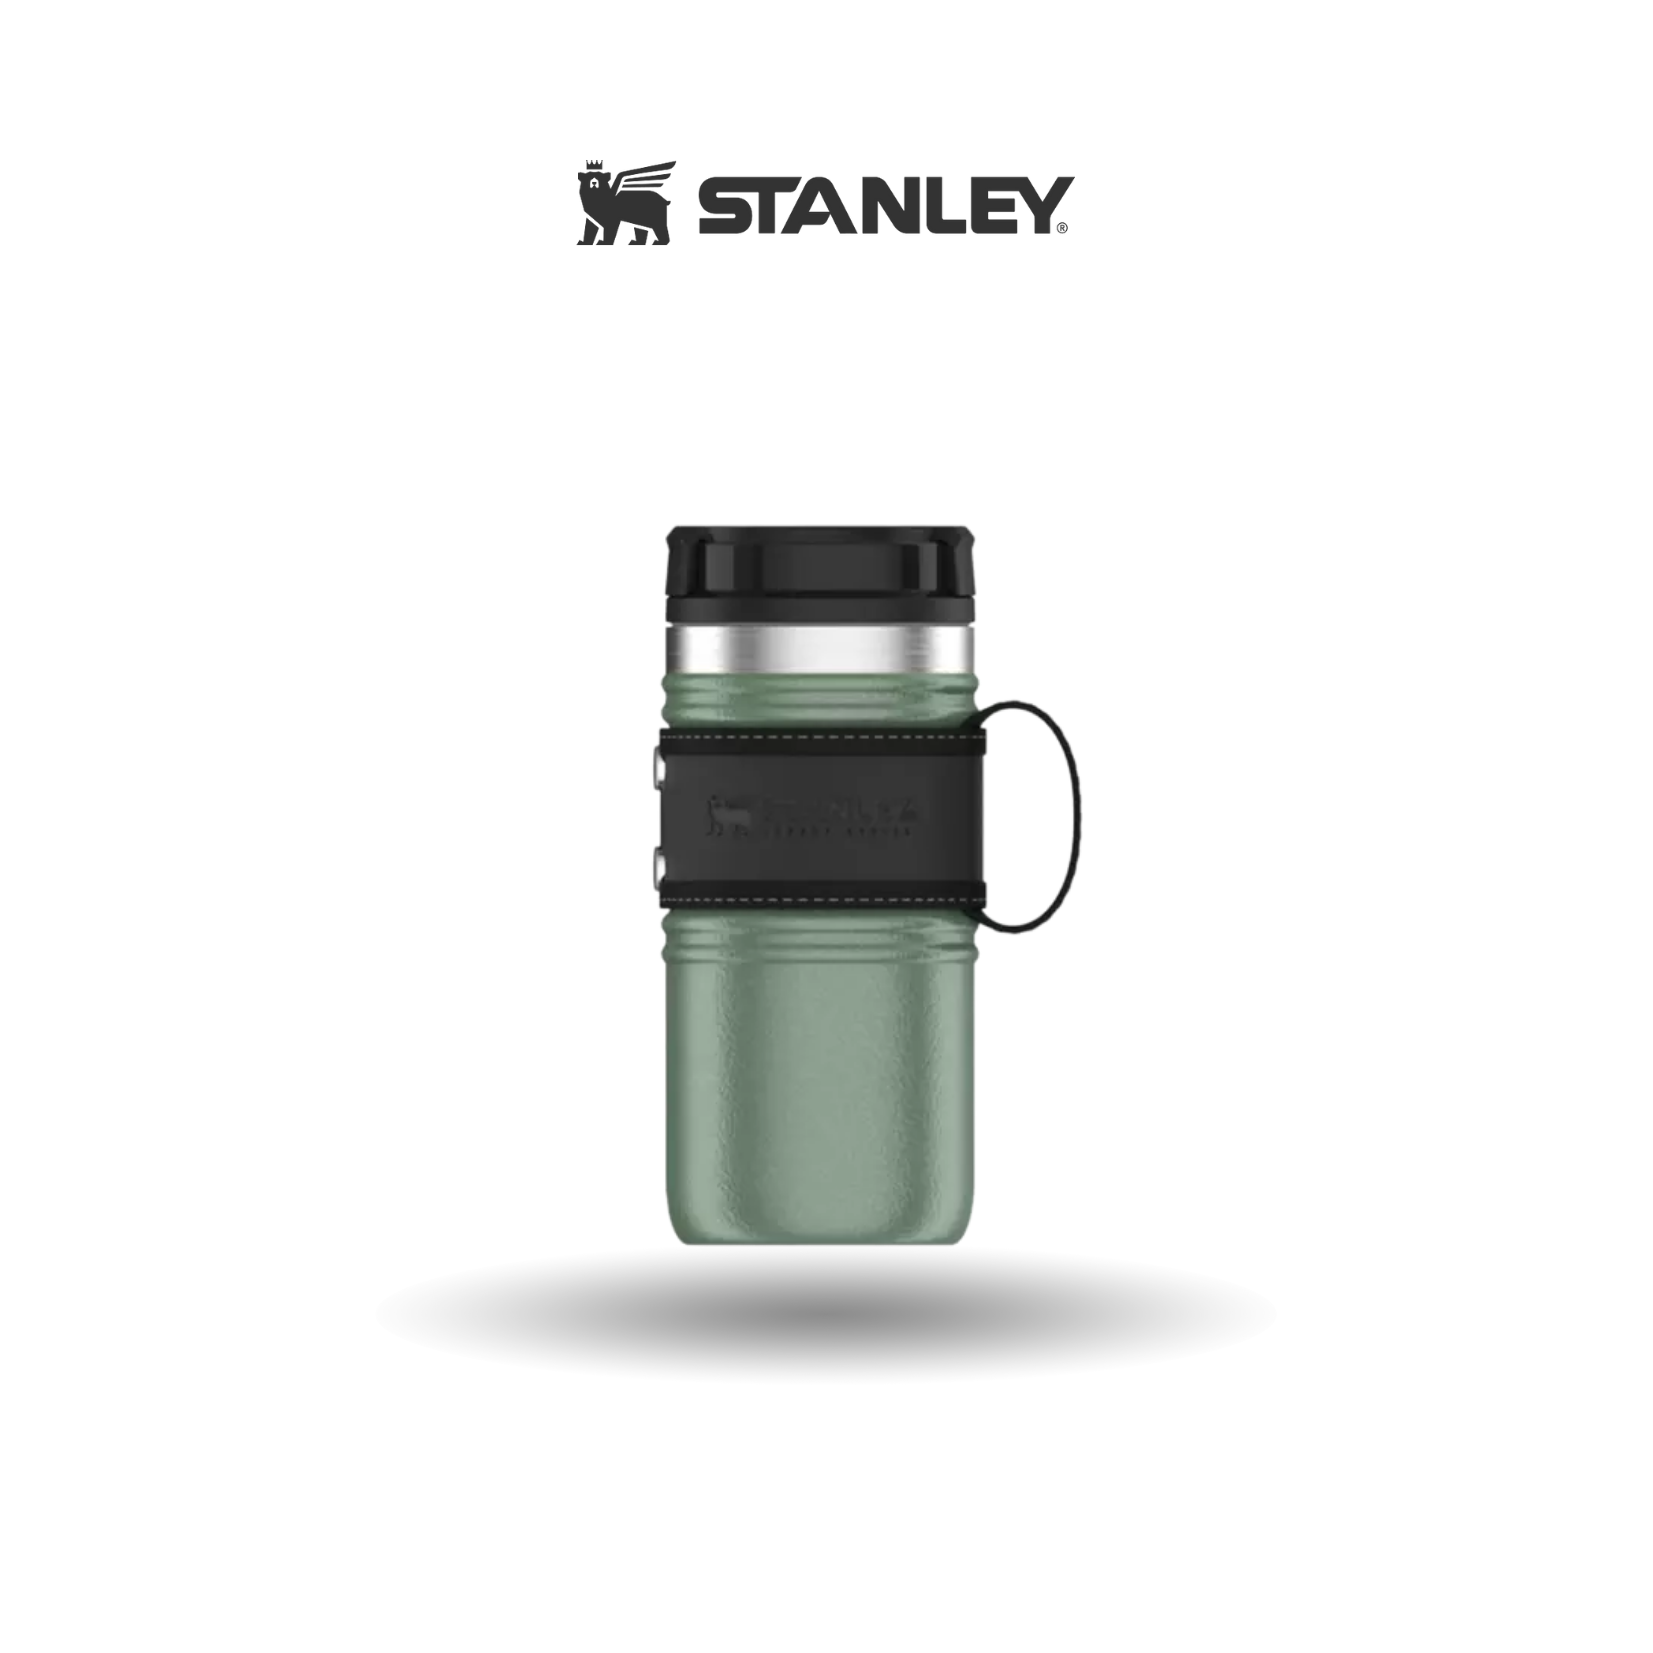 Stanley Legacy Neverleak Travel Mug - 18/8 Stainless Steel, BPA-Free Leakproof And Packable Mug Easily Removable Grip Wrap